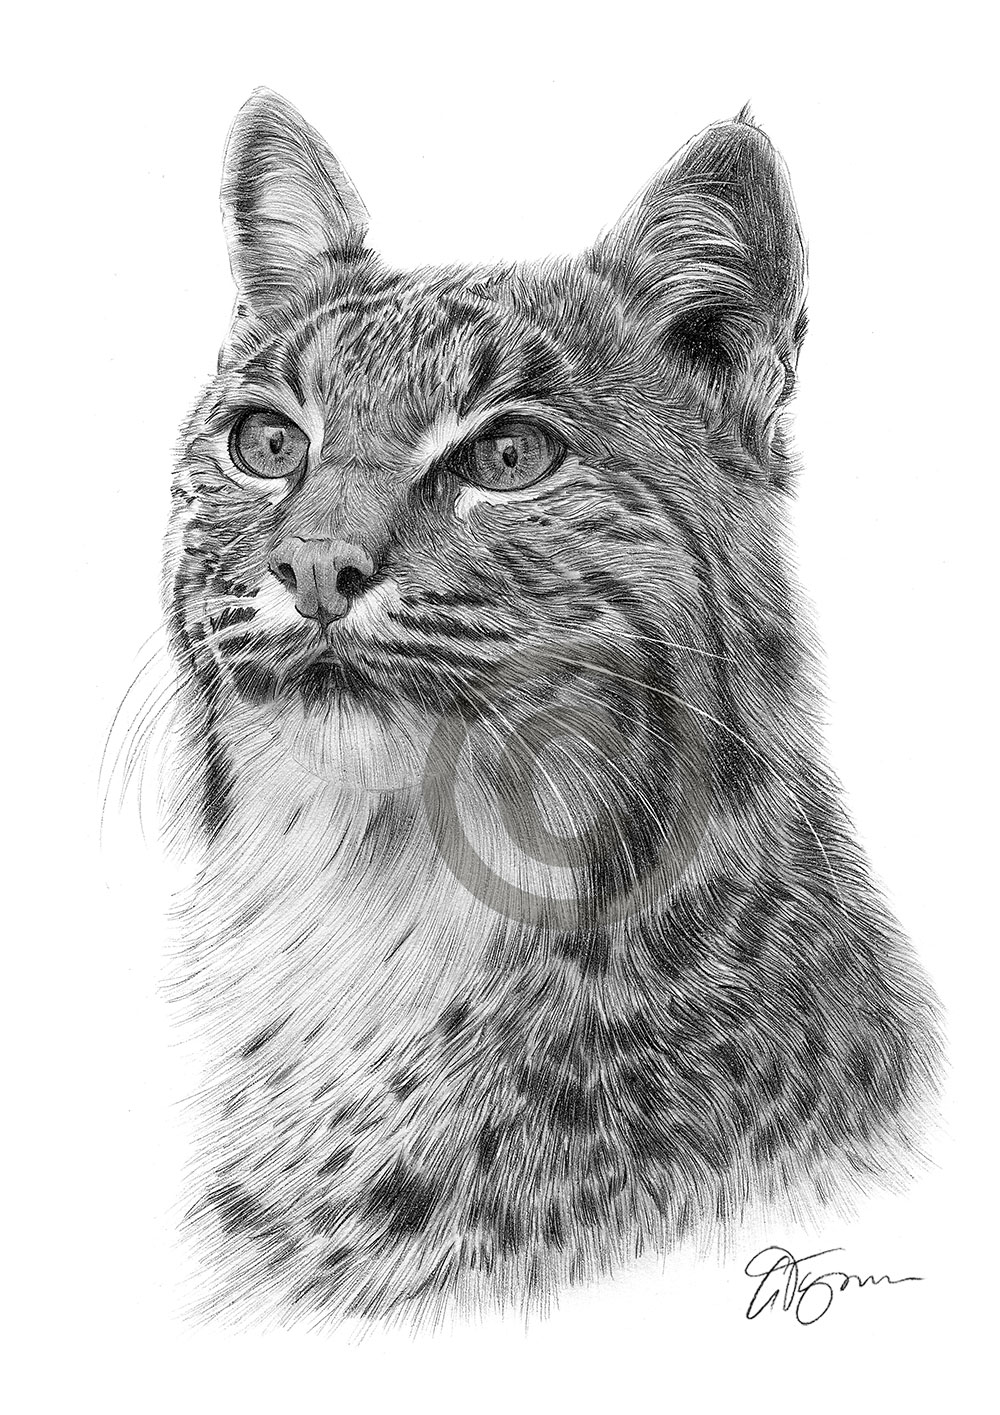 Pencil drawing of a bobcat lynx by artist Gary Tymon